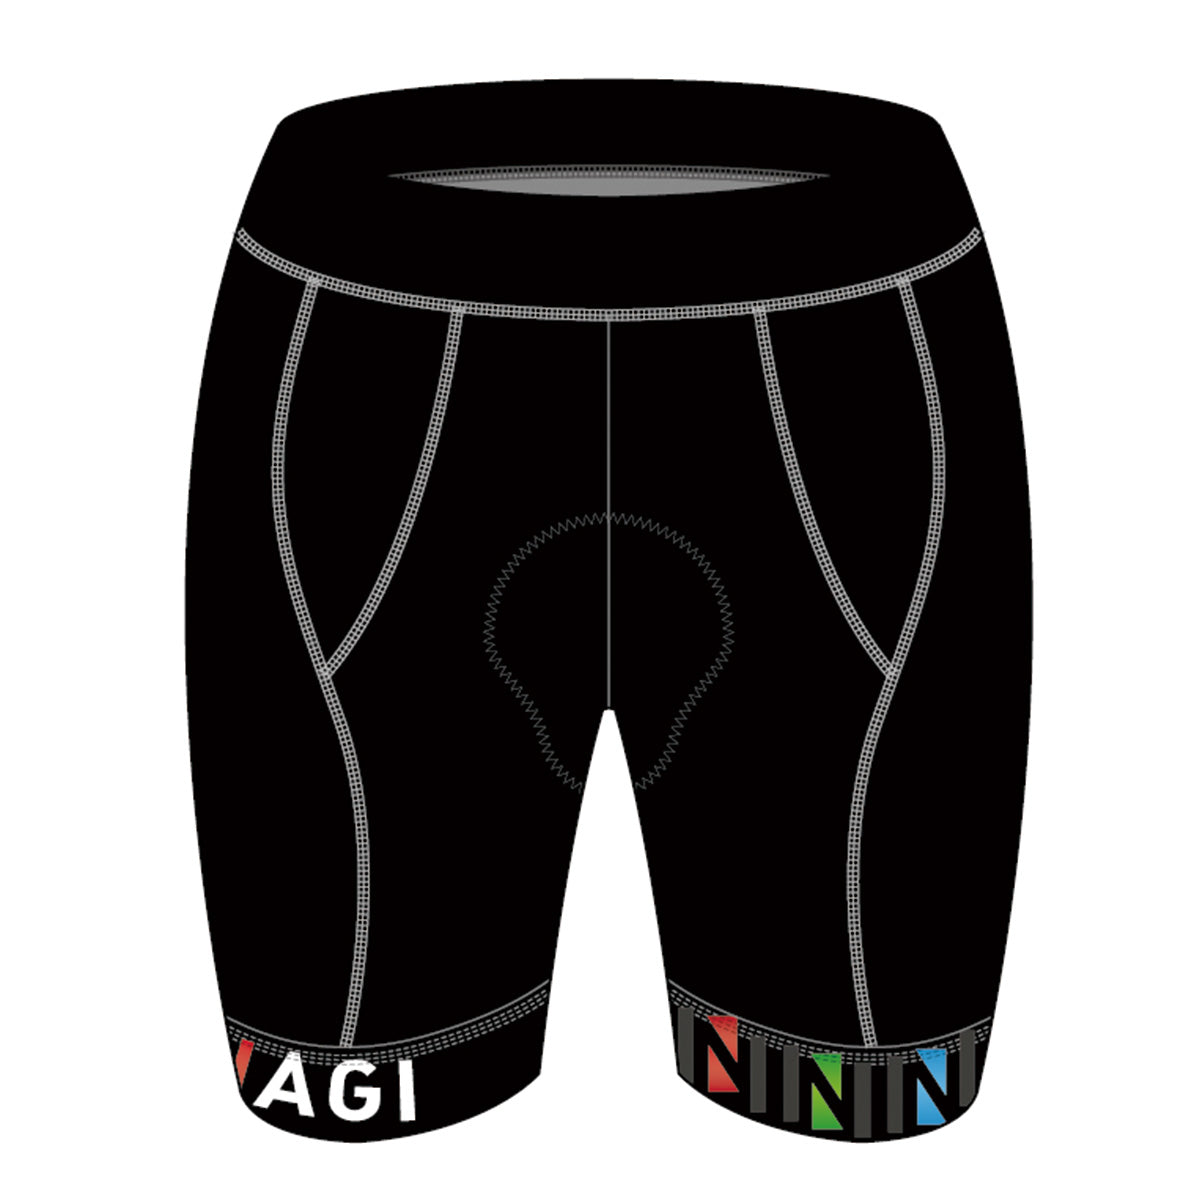 Team Nagi BLACK BRONZE Tri Shorts